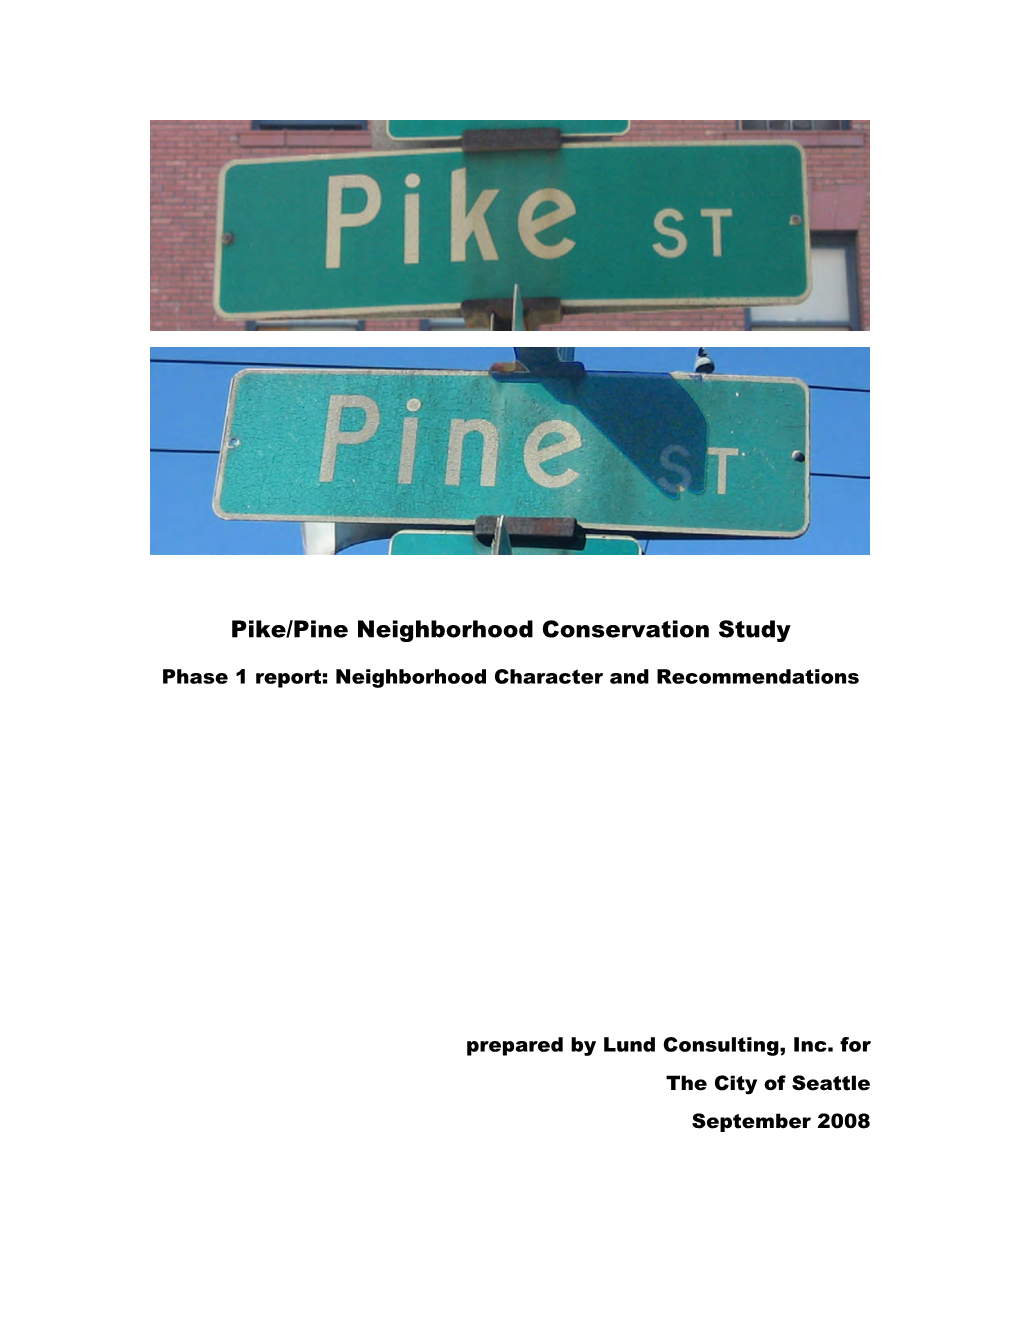 Pike / Pine Neighborhood Conservation Study, Phase 1 Report